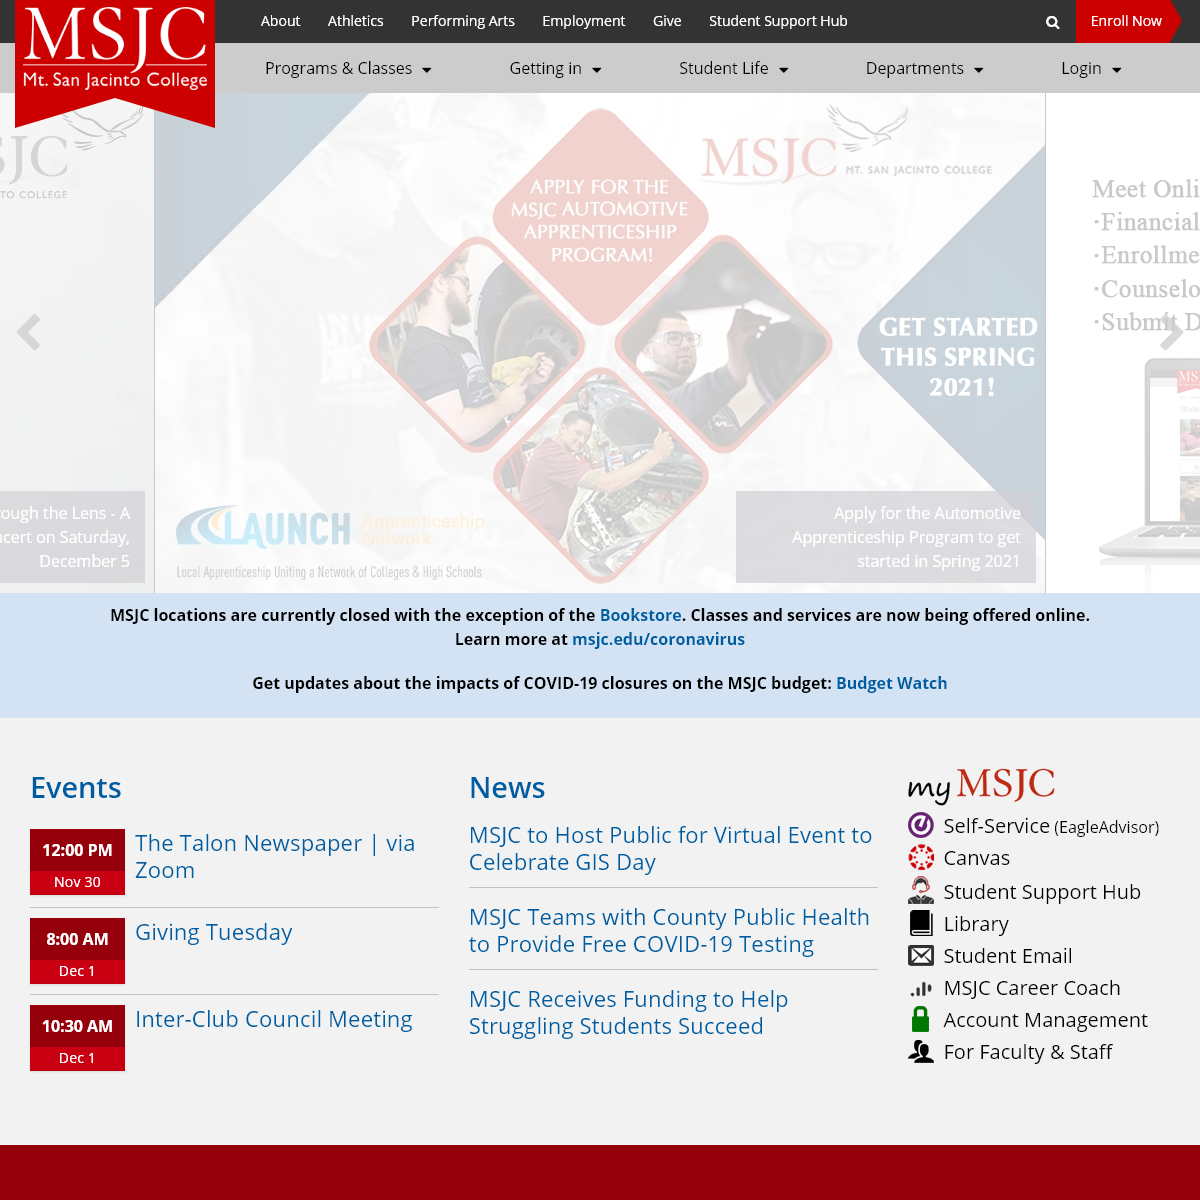 A complete backup of msjc.edu